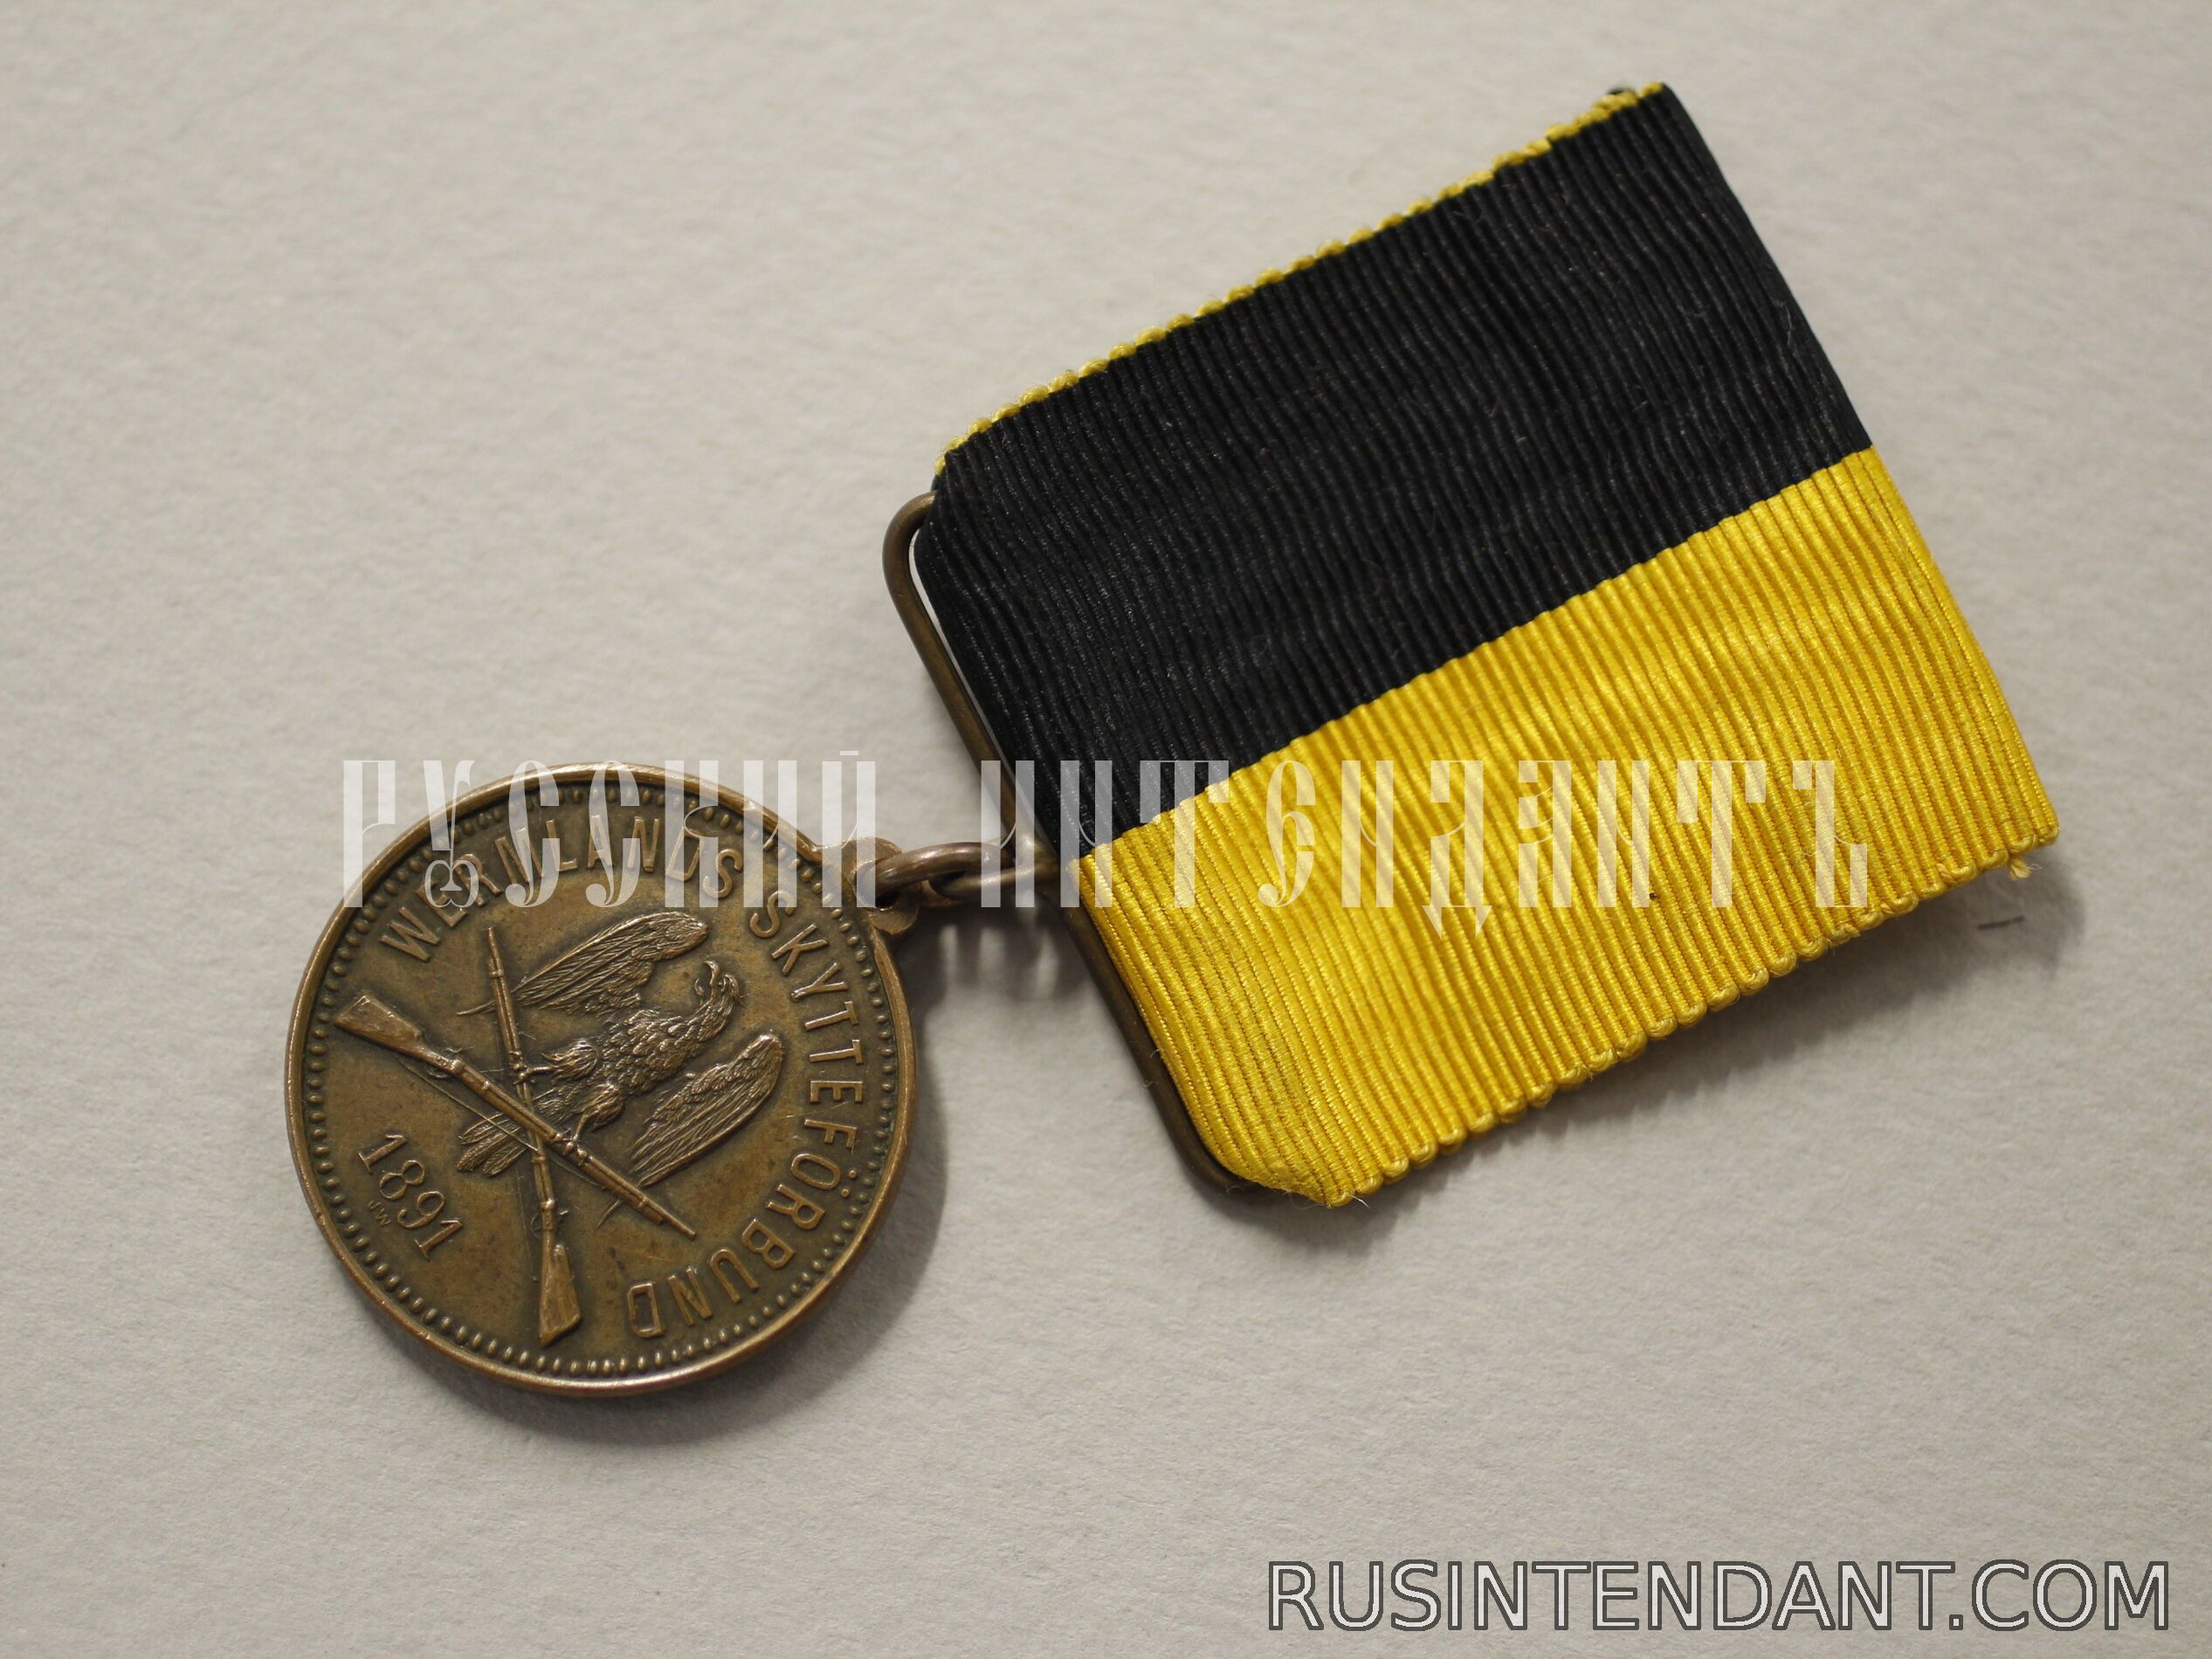 Фото 3: Медаль Стрелковая ассоциация провинции Вермланд 